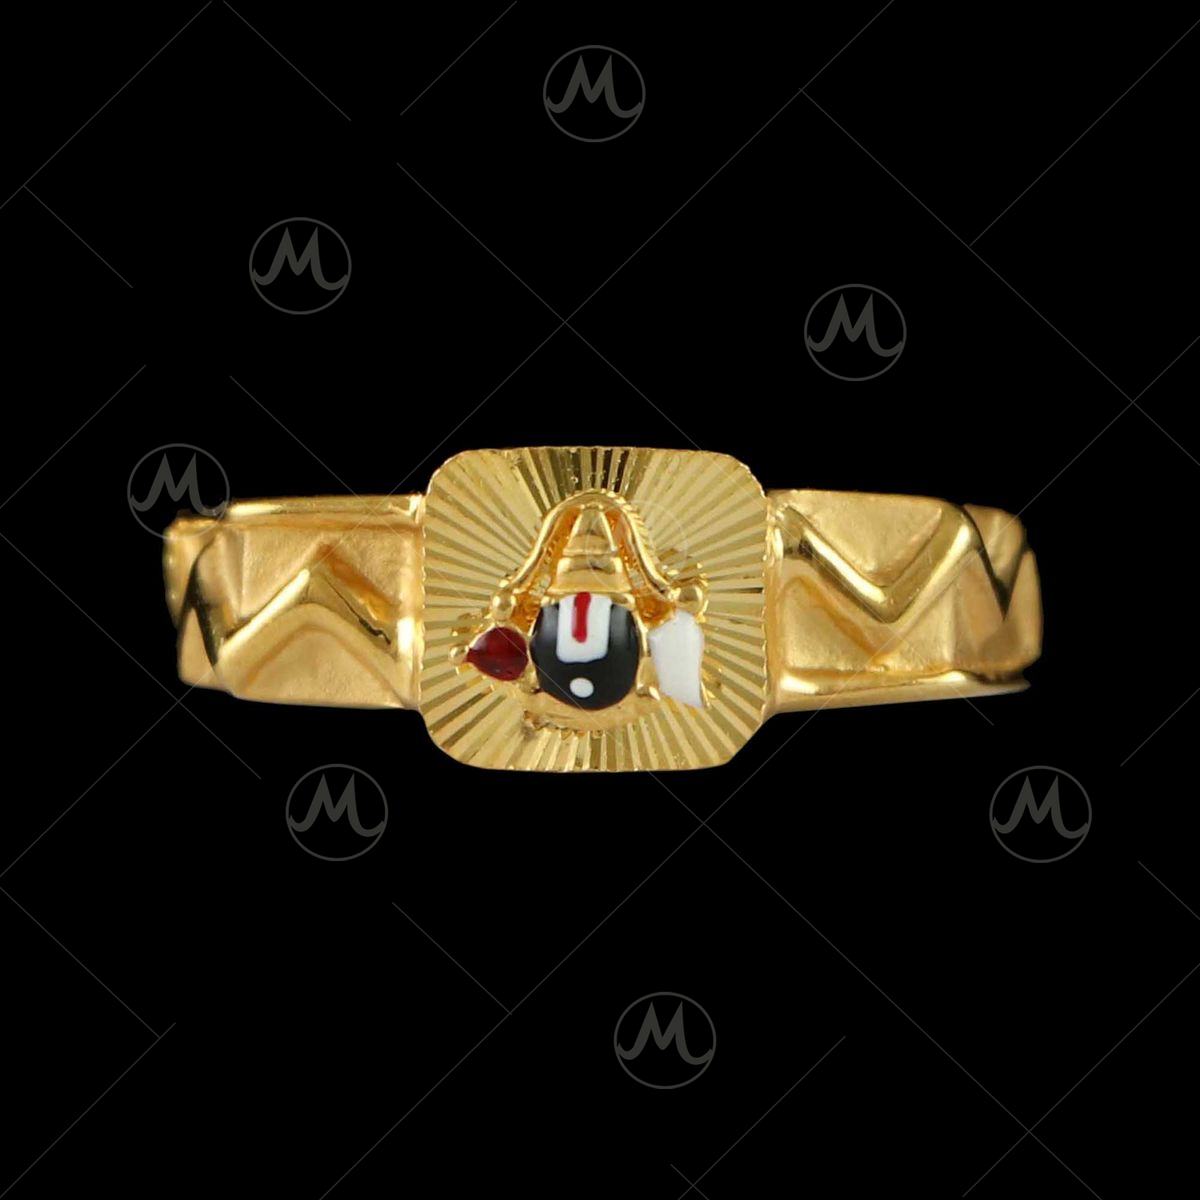 INRENG Gold All Seeing Eye Ring for Men Illuminati Triangle Eye of God  Pyramid Symbol Ring All Gold Size 7|Amazon.com